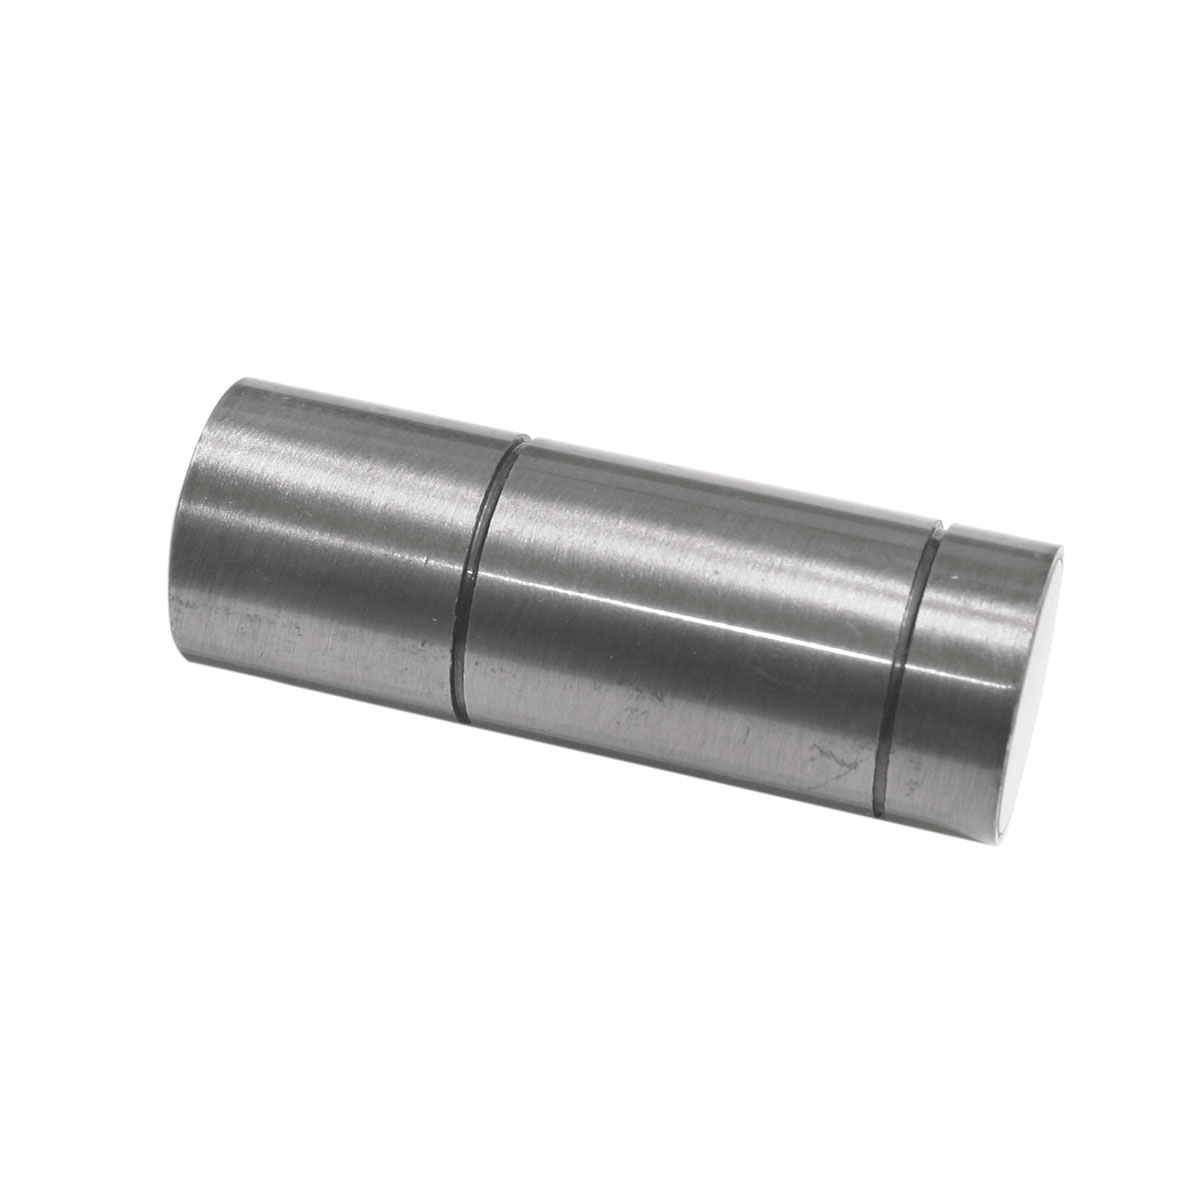 Endknopf „Romana Zylinder“, Ø 20 mm, silber/satin, 2 Stück